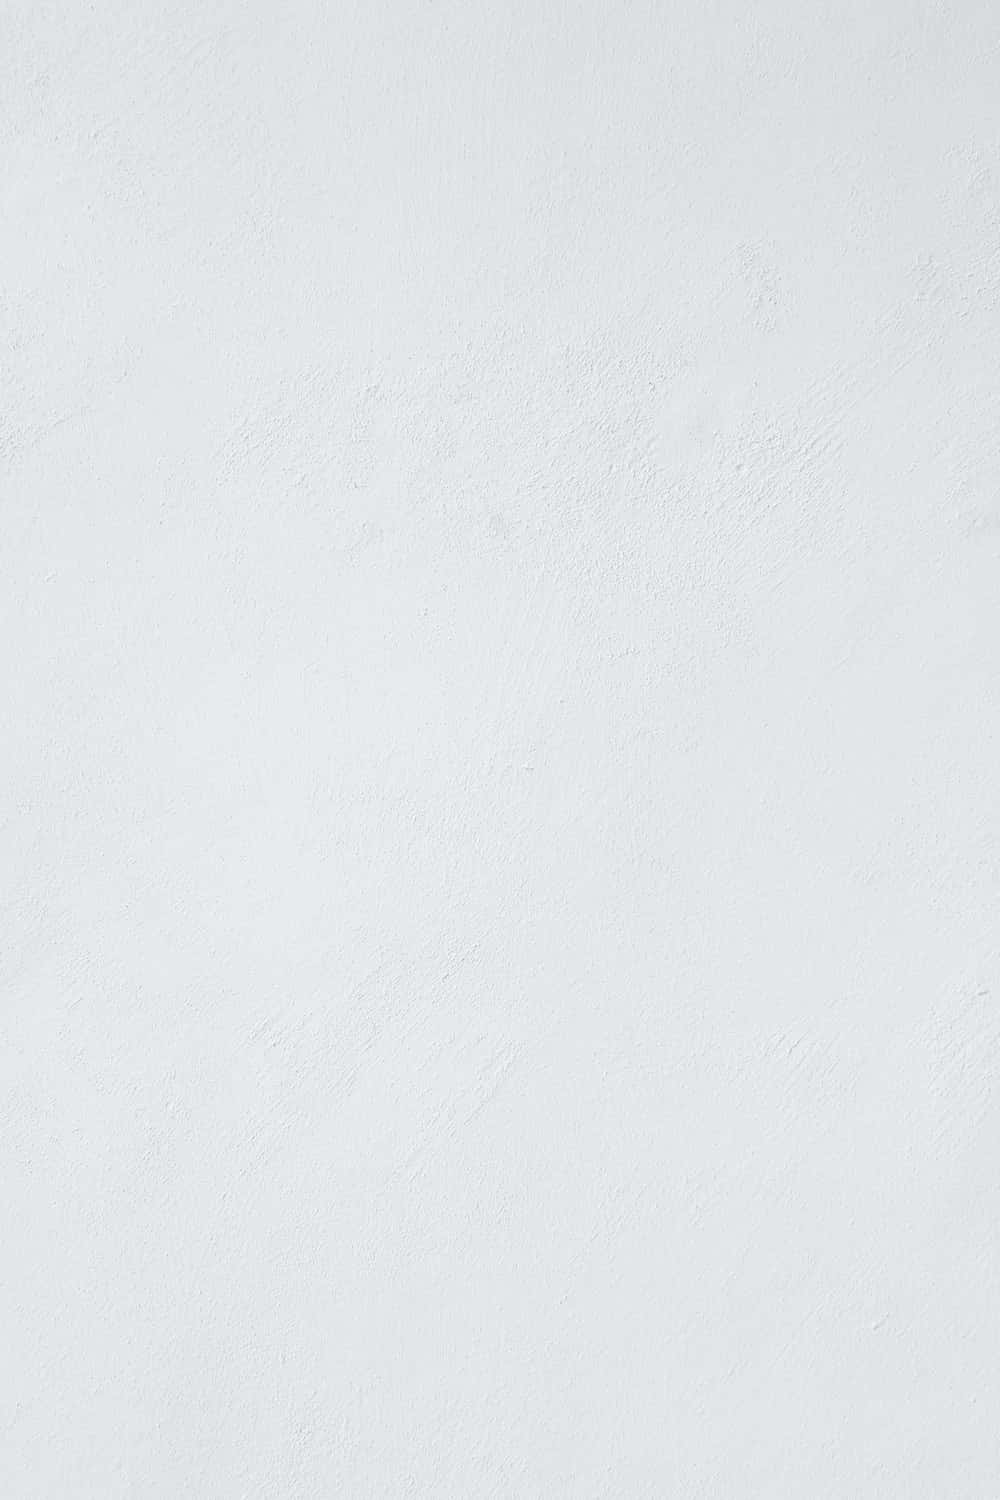 Captivating minimalist White Wall